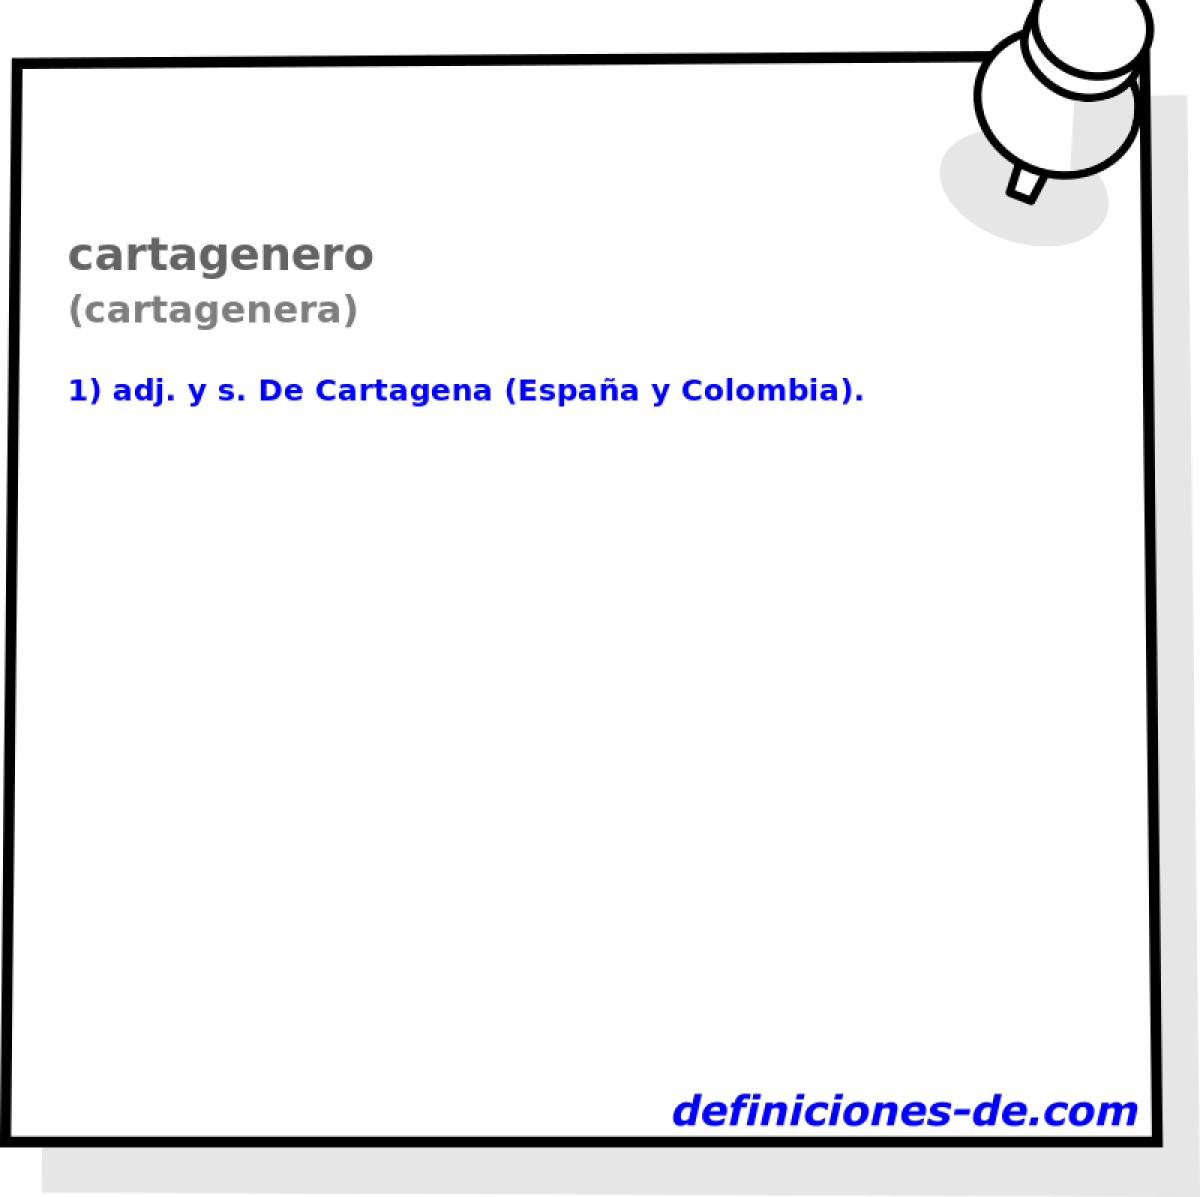 cartagenero (cartagenera)